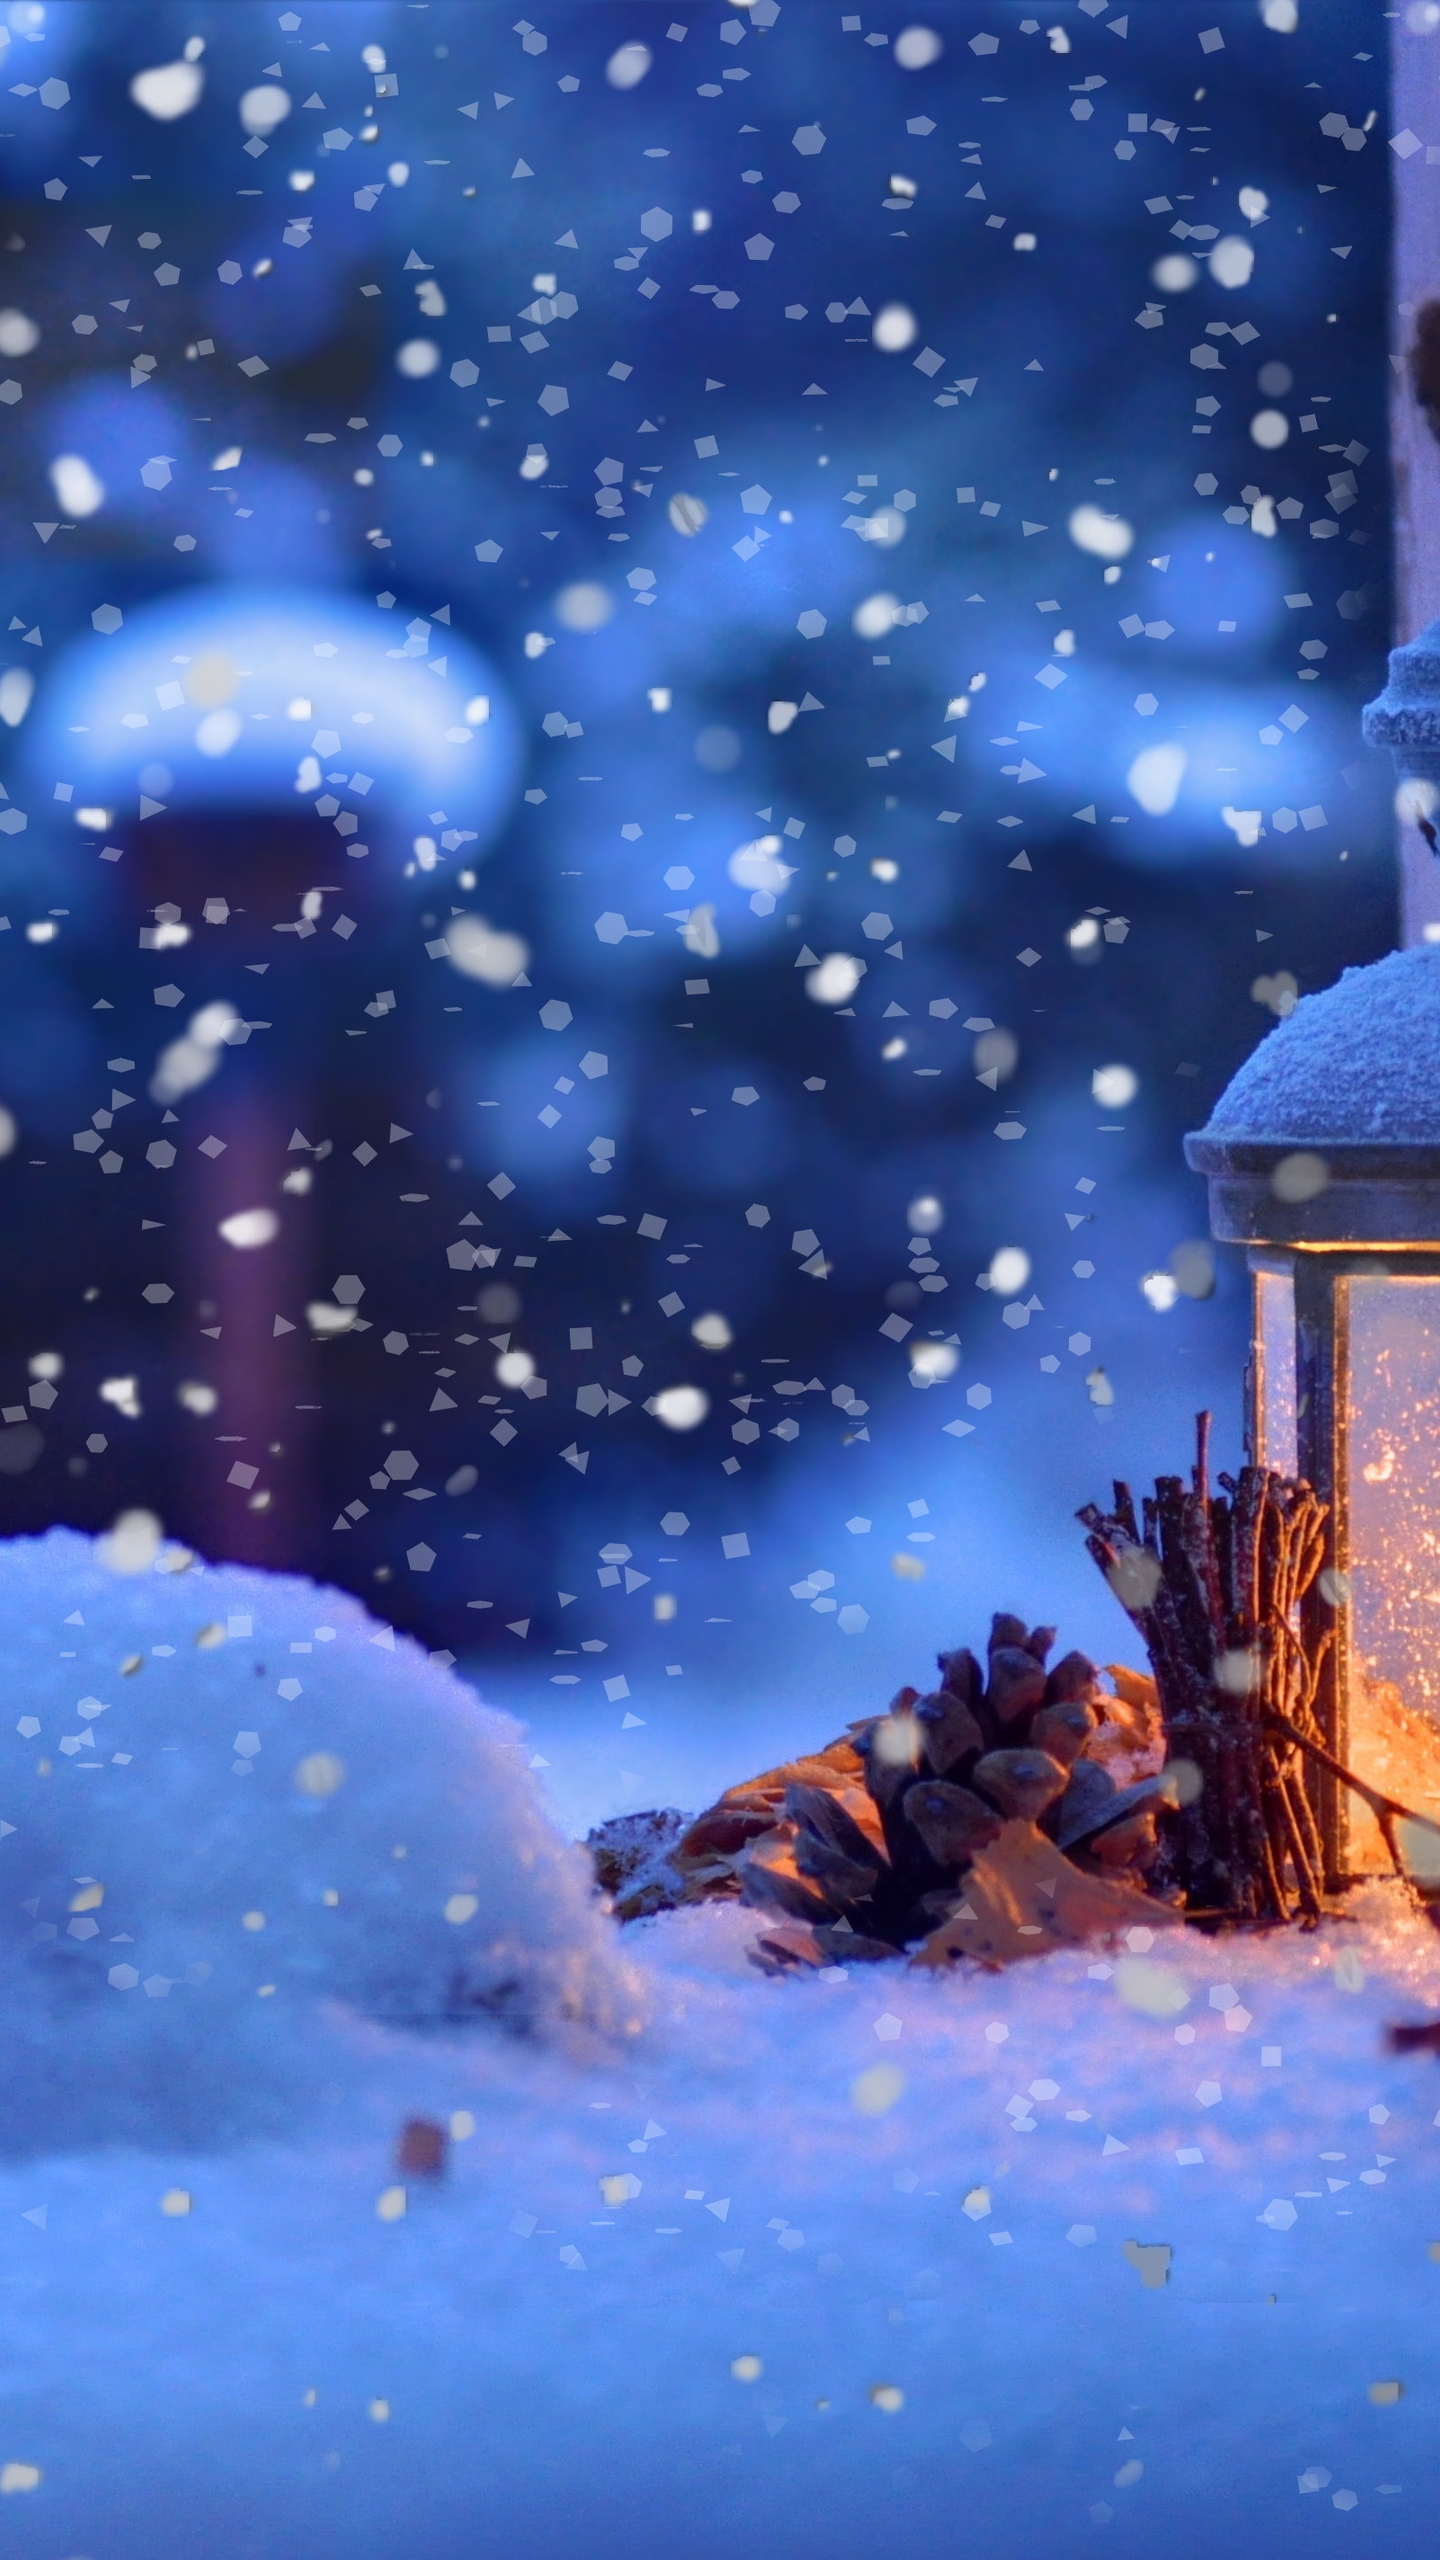 Image: Snow, snowflakes, winter, New year, lantern, lamp, fir cones, light